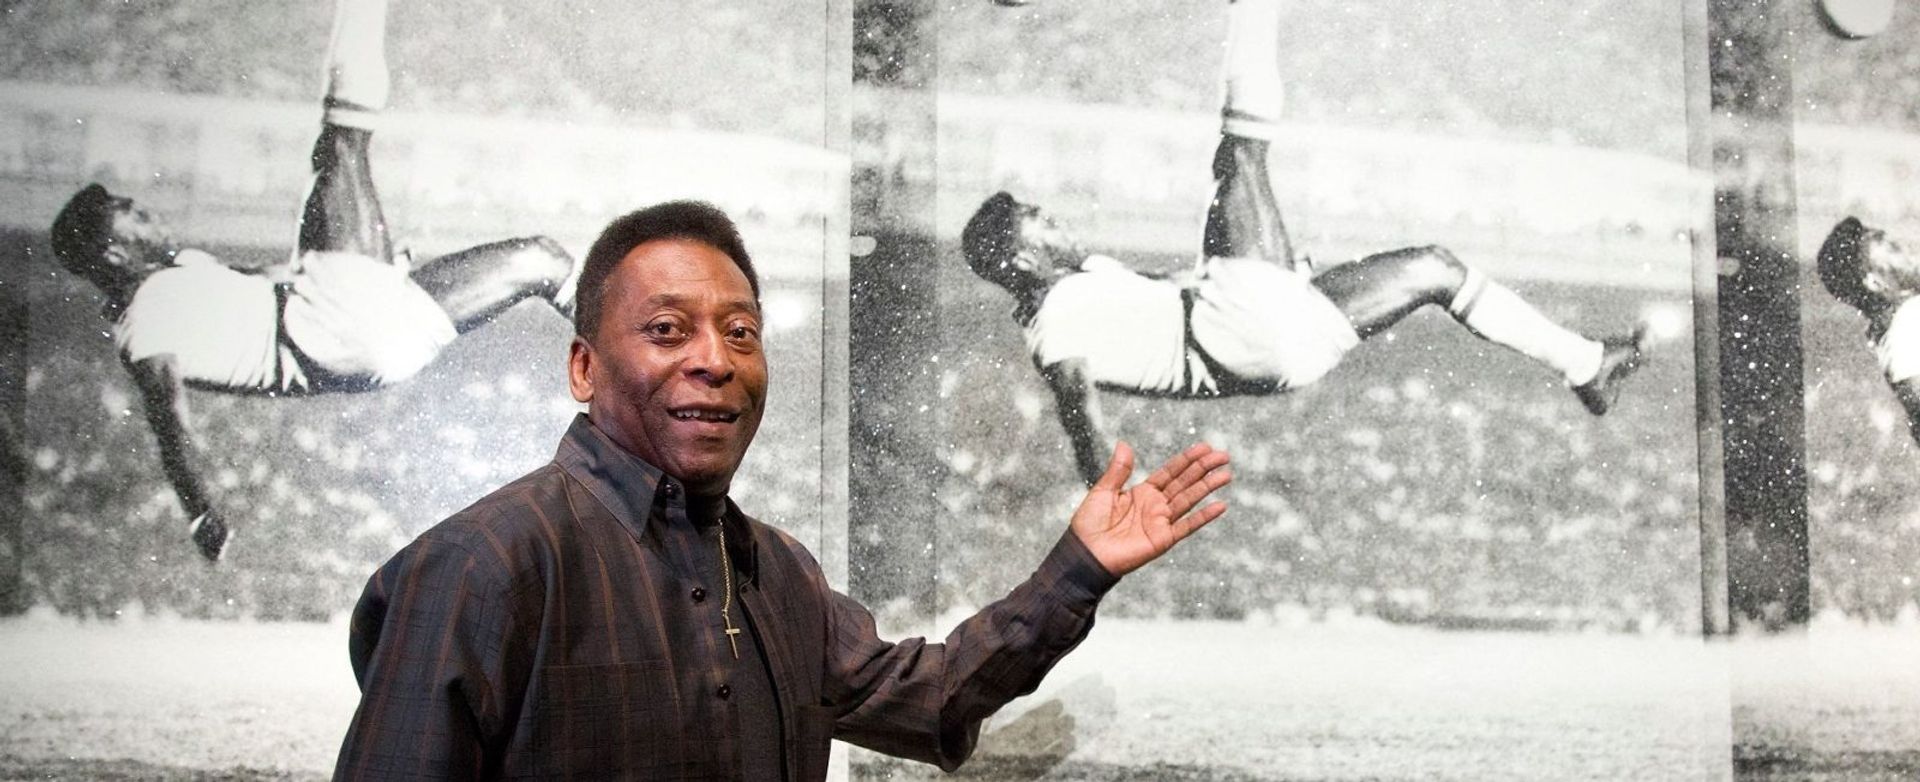 Pelé: Massive achievements by the legendary Brazilian football player